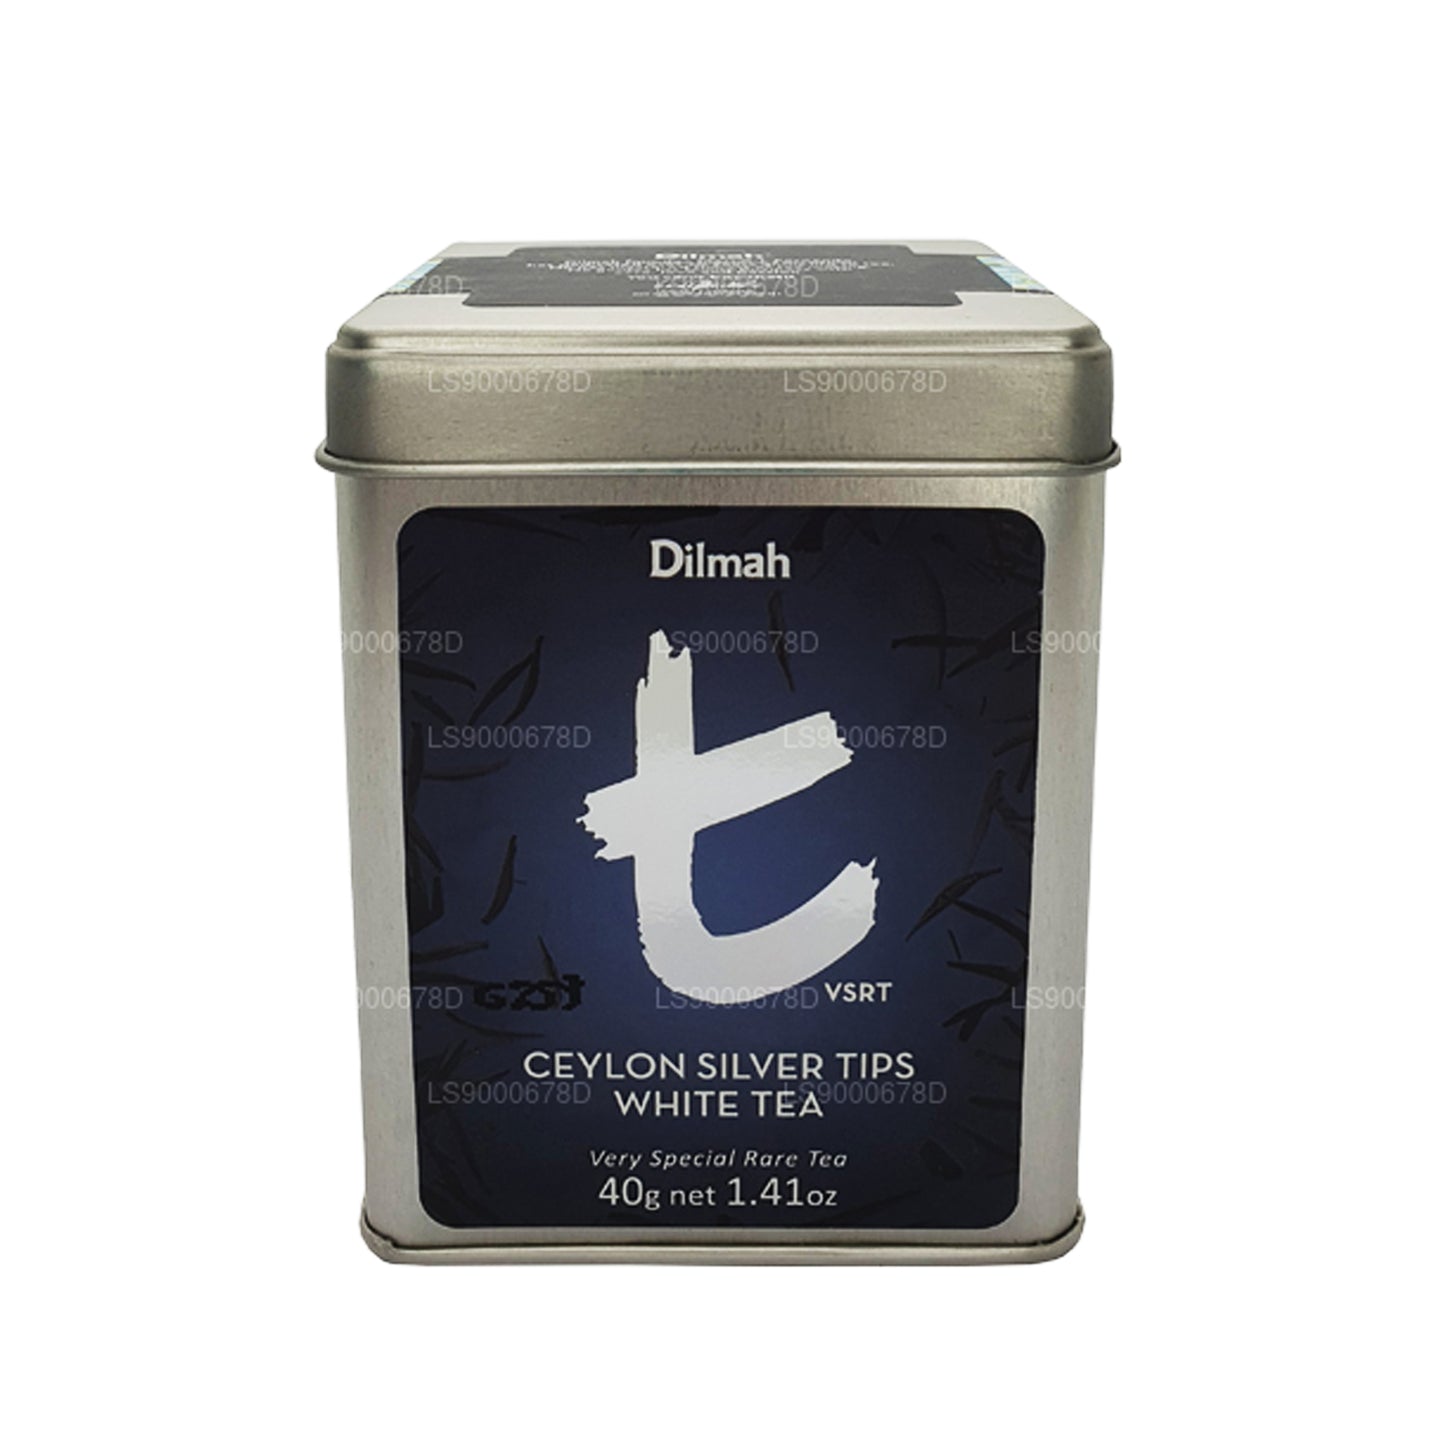 Dilmah Ceylon Silver Tips White Tea (40 g) Dose Loose Tea